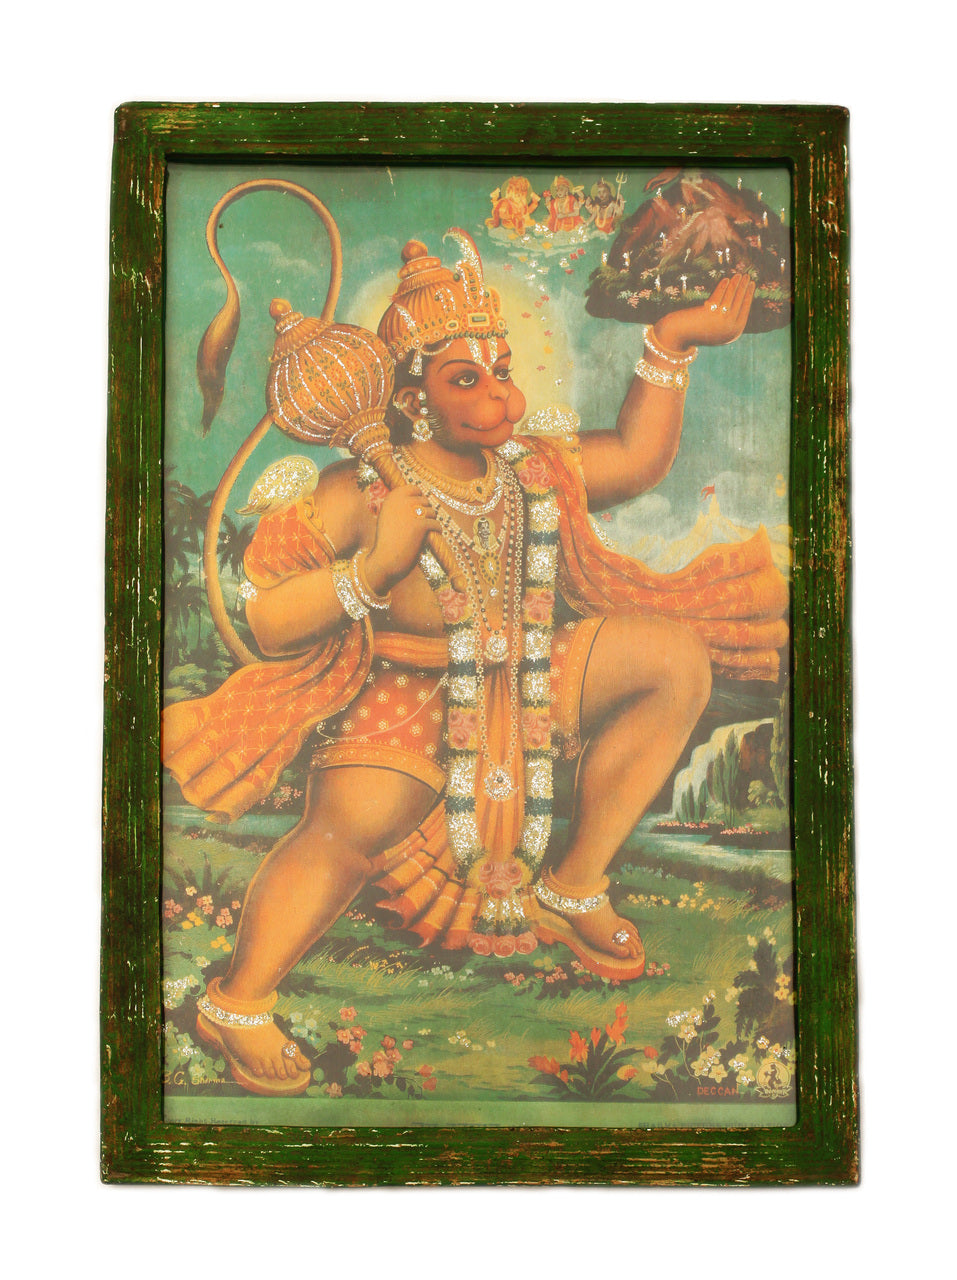 Hanuman the Hindu Monkey God that Defeats Evil Spirits, Fabulous Hand-Glittered Vivid Reproduction of a Painting